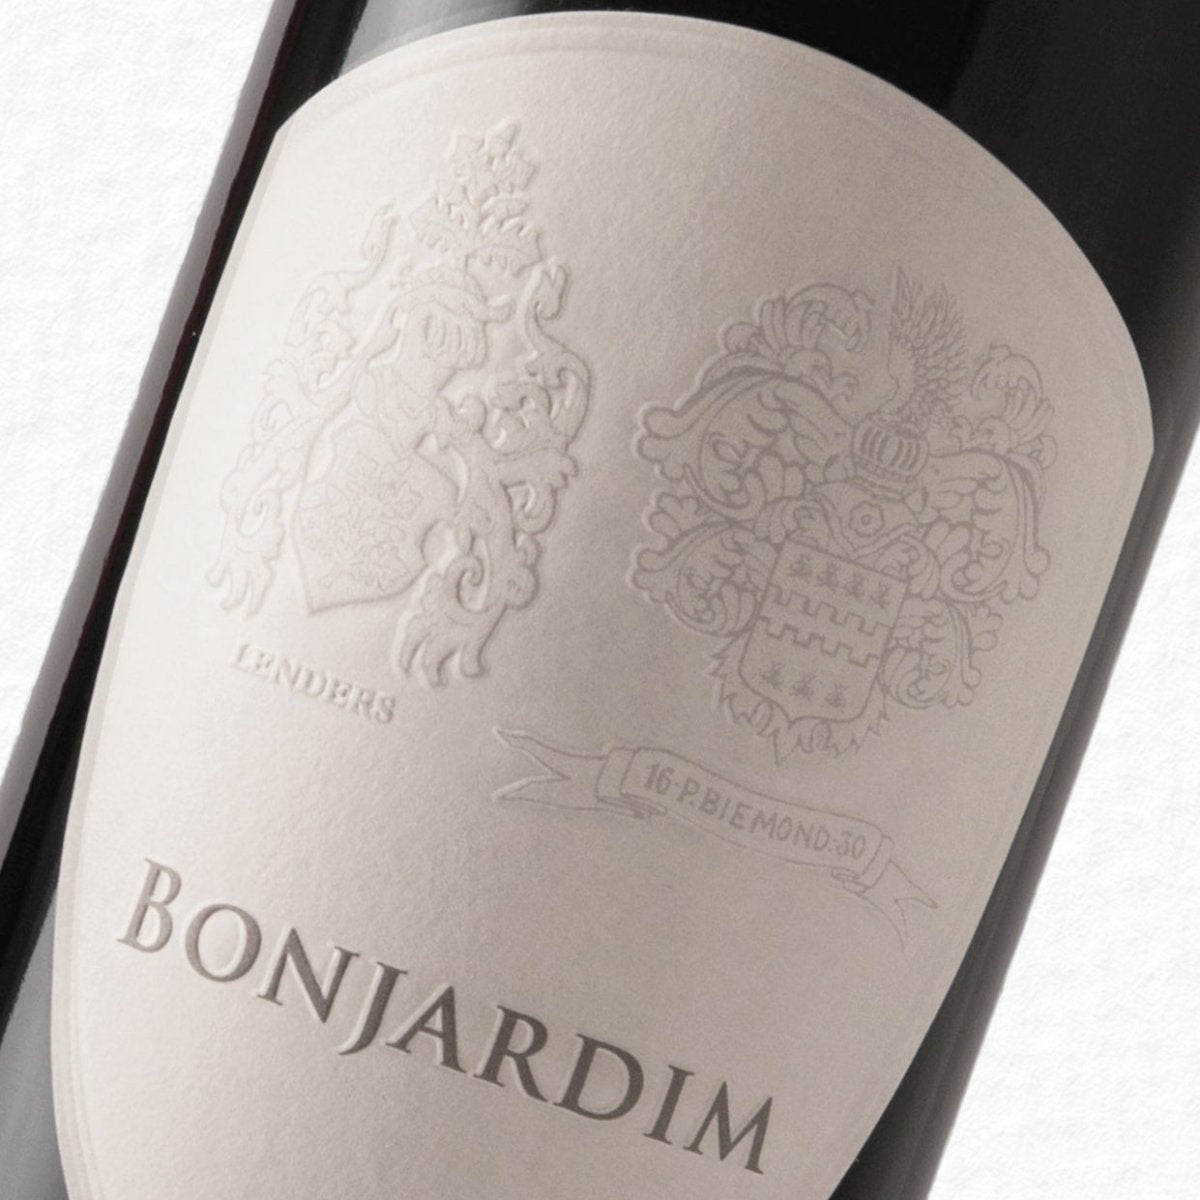 Bonjardim Red 2016 - Bonjardim Wines- Red Wine